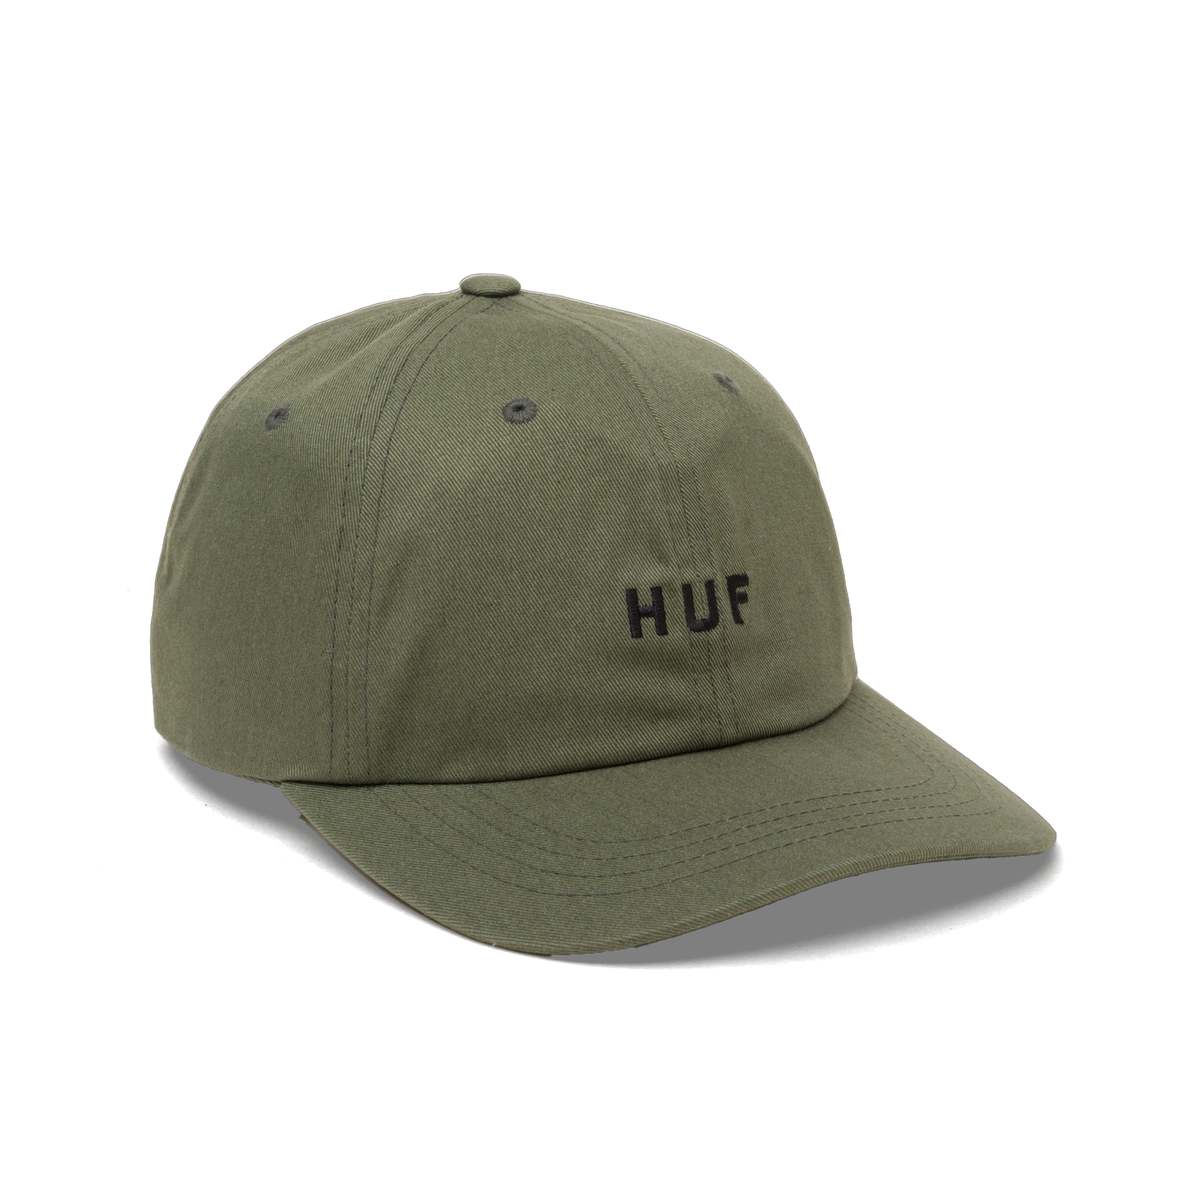 HUF Set Og Cv 6 Panel Hat - Avocado